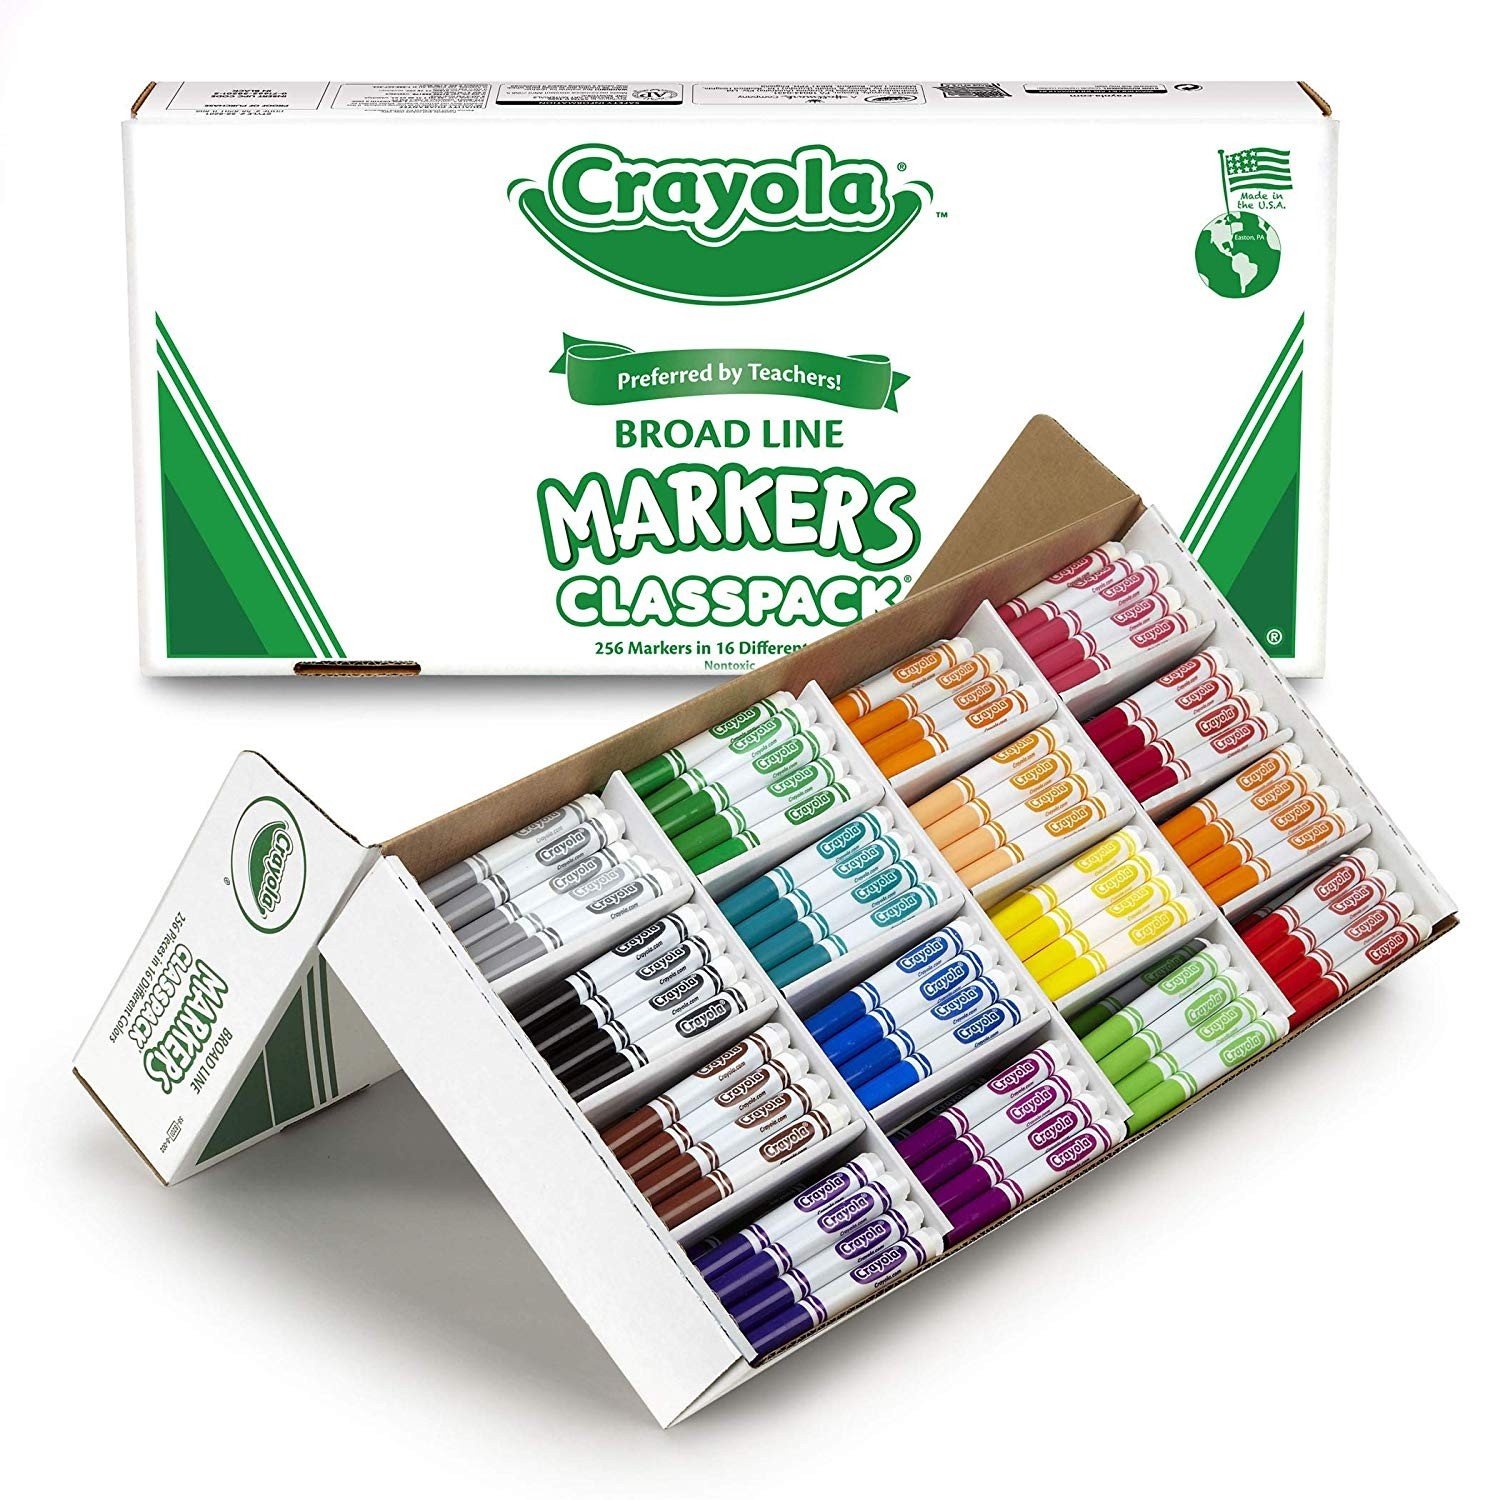 Crayola Broad Line Markers Classpack